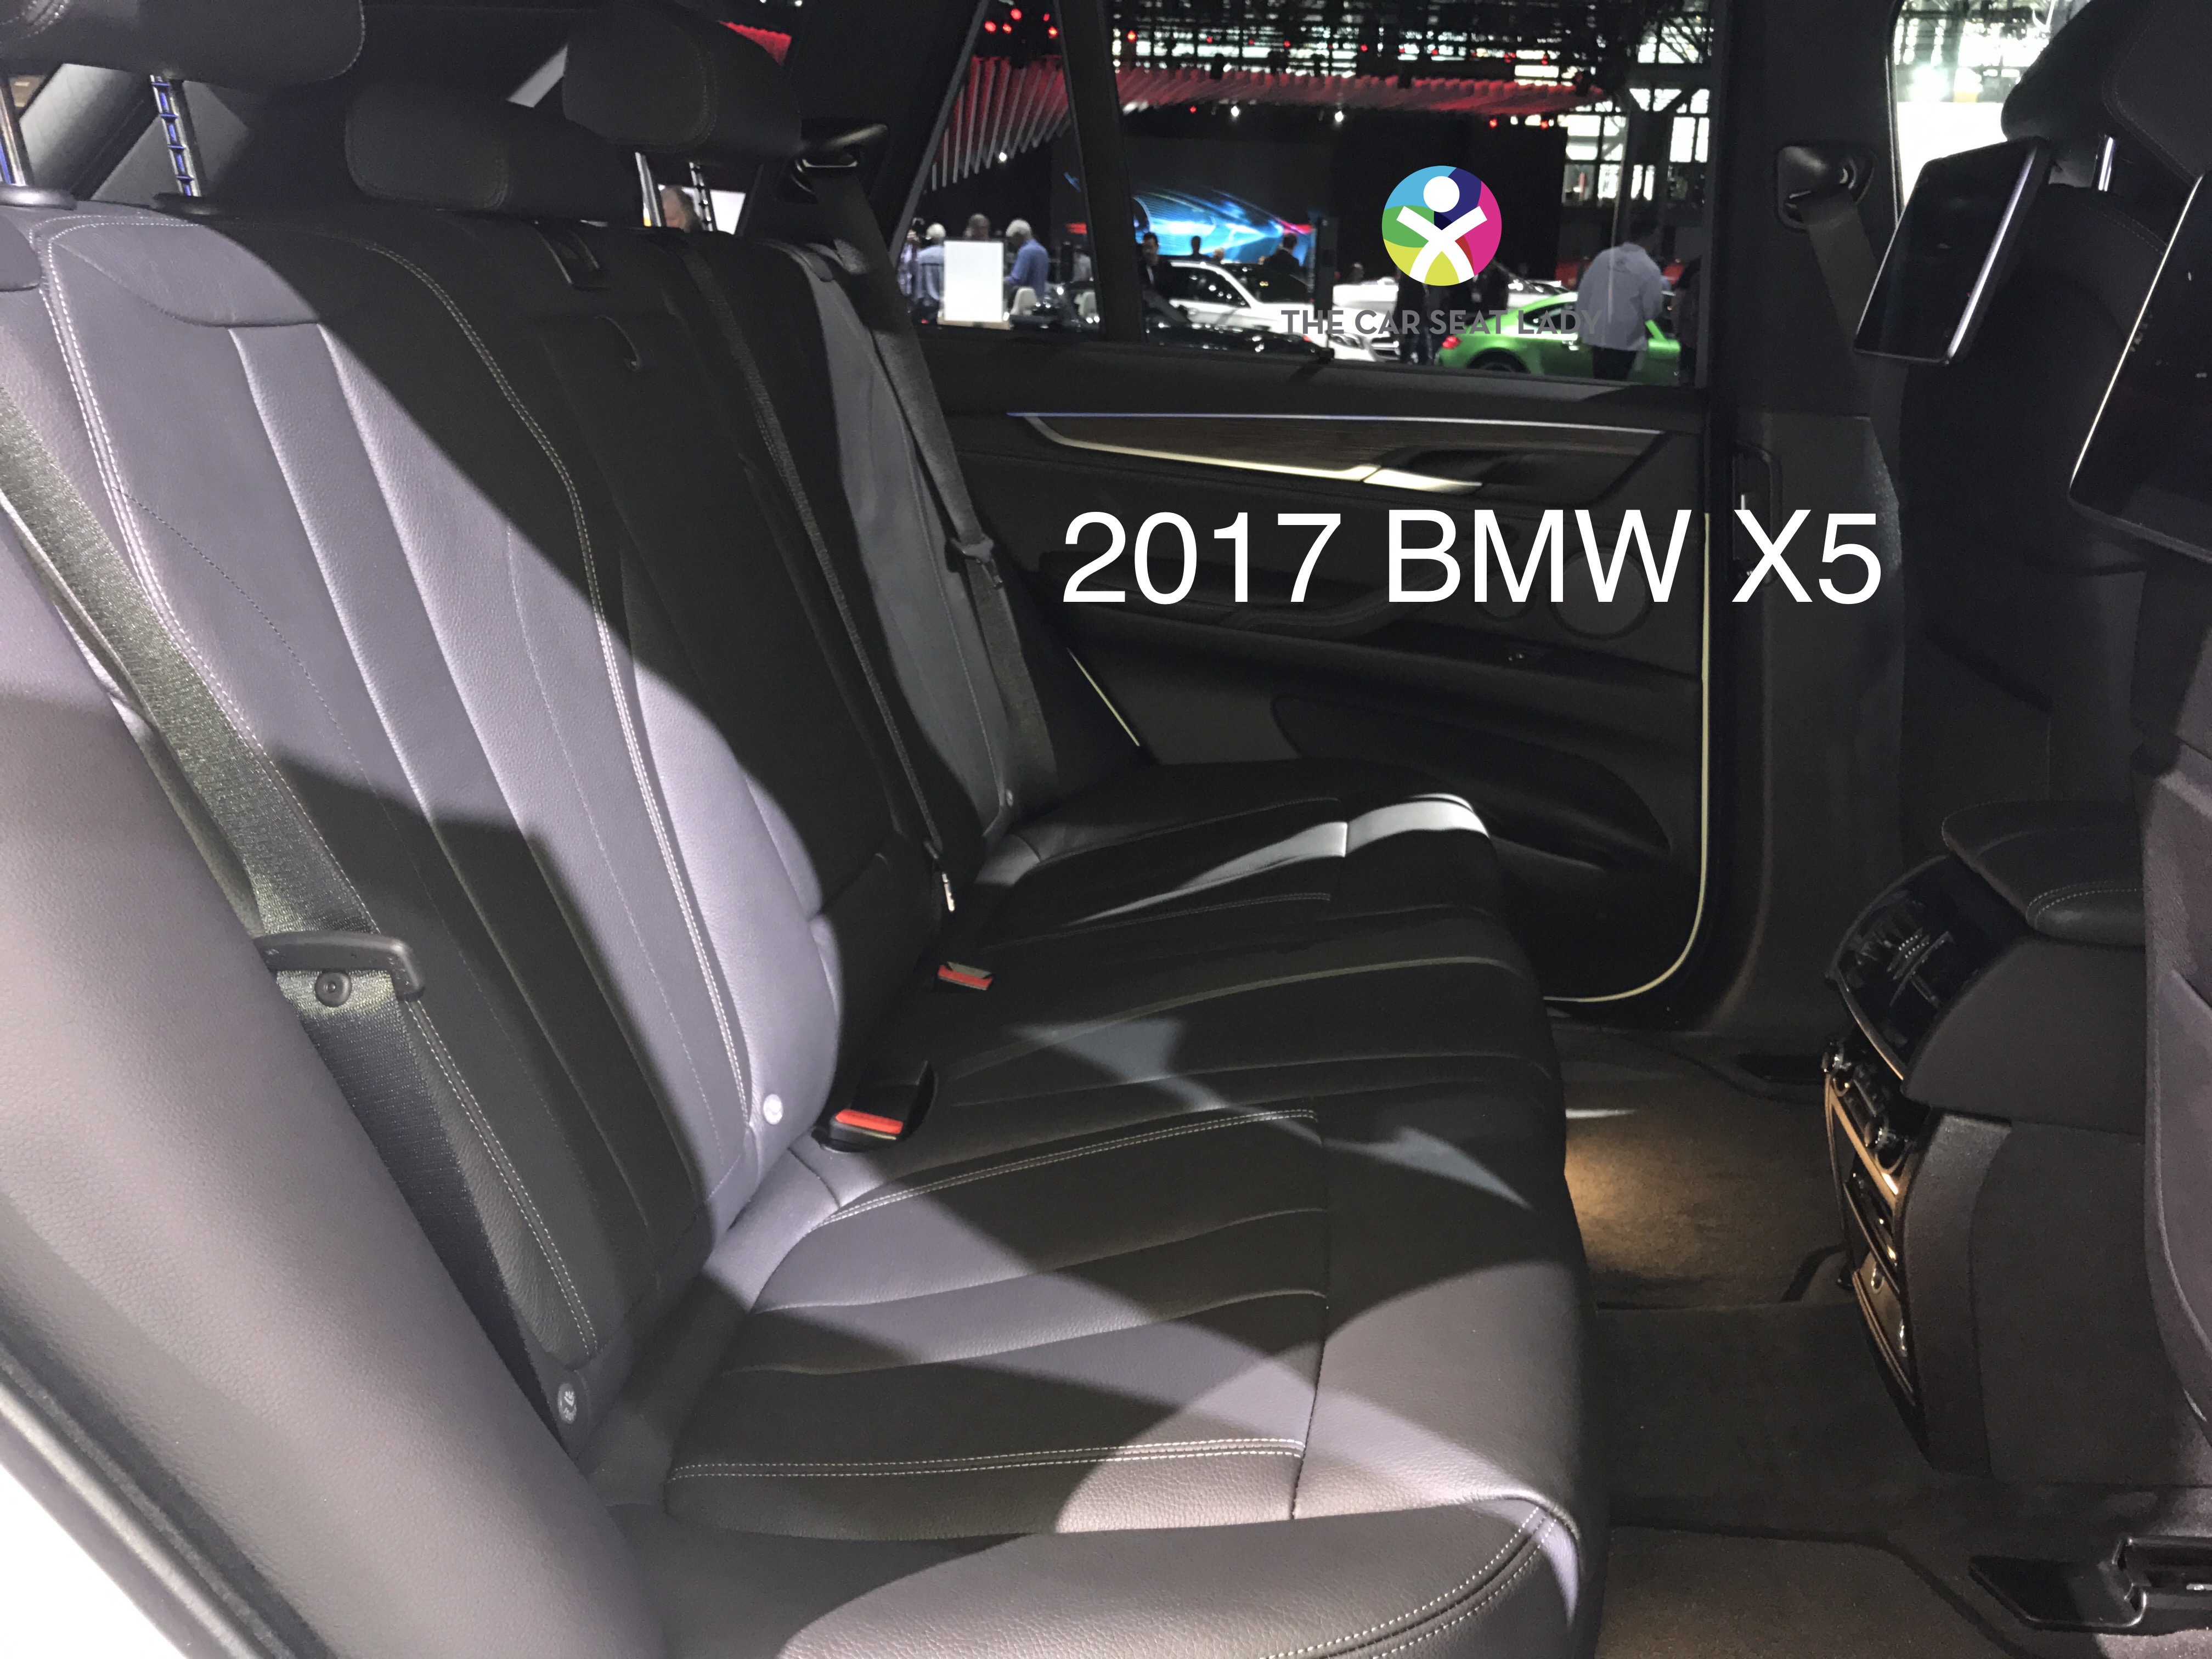 The Car Seat LadyBMW X5 - The Car Seat Lady